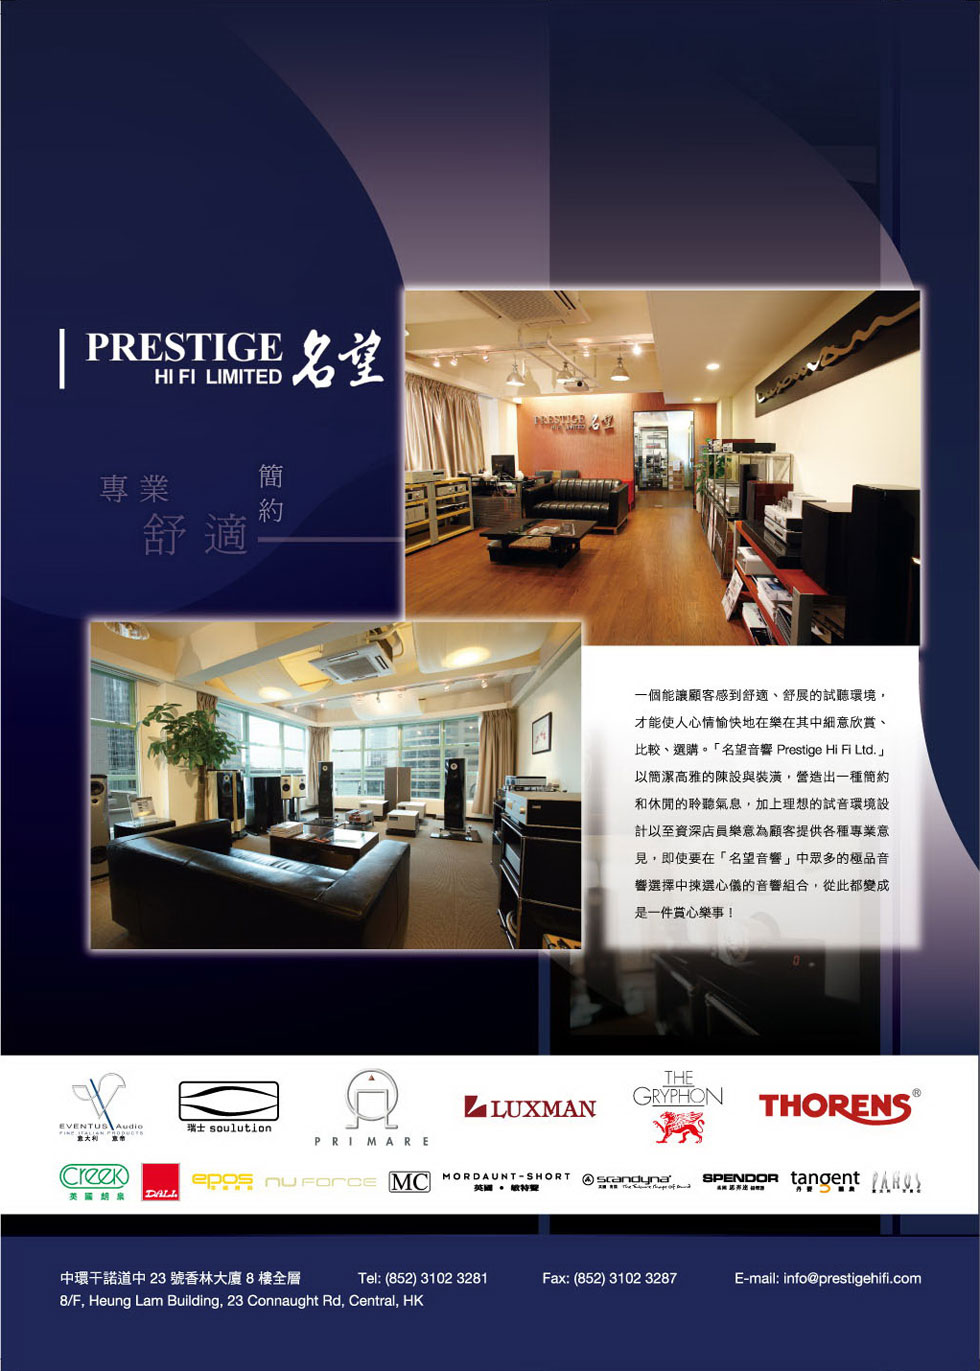 名望音響 - Prestige Hi Fi Limited